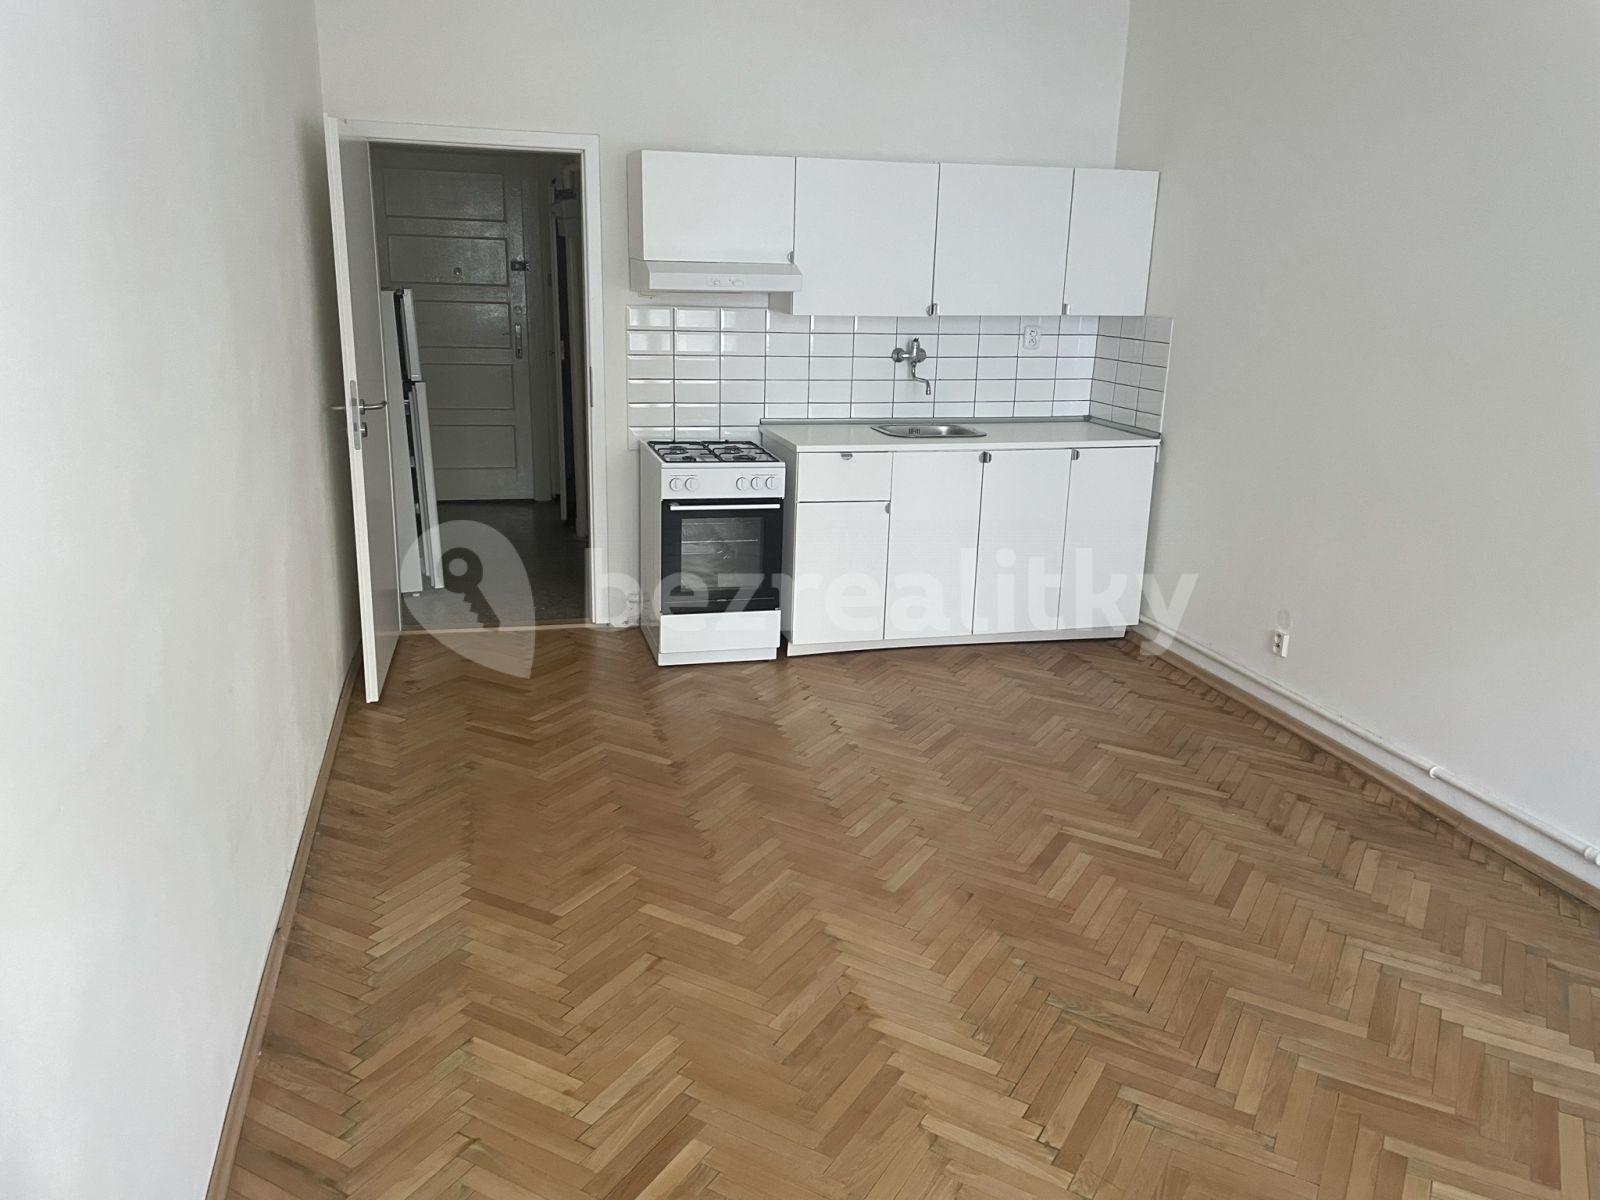 Small studio flat to rent, 30 m², 28. pluku, Prague, Prague